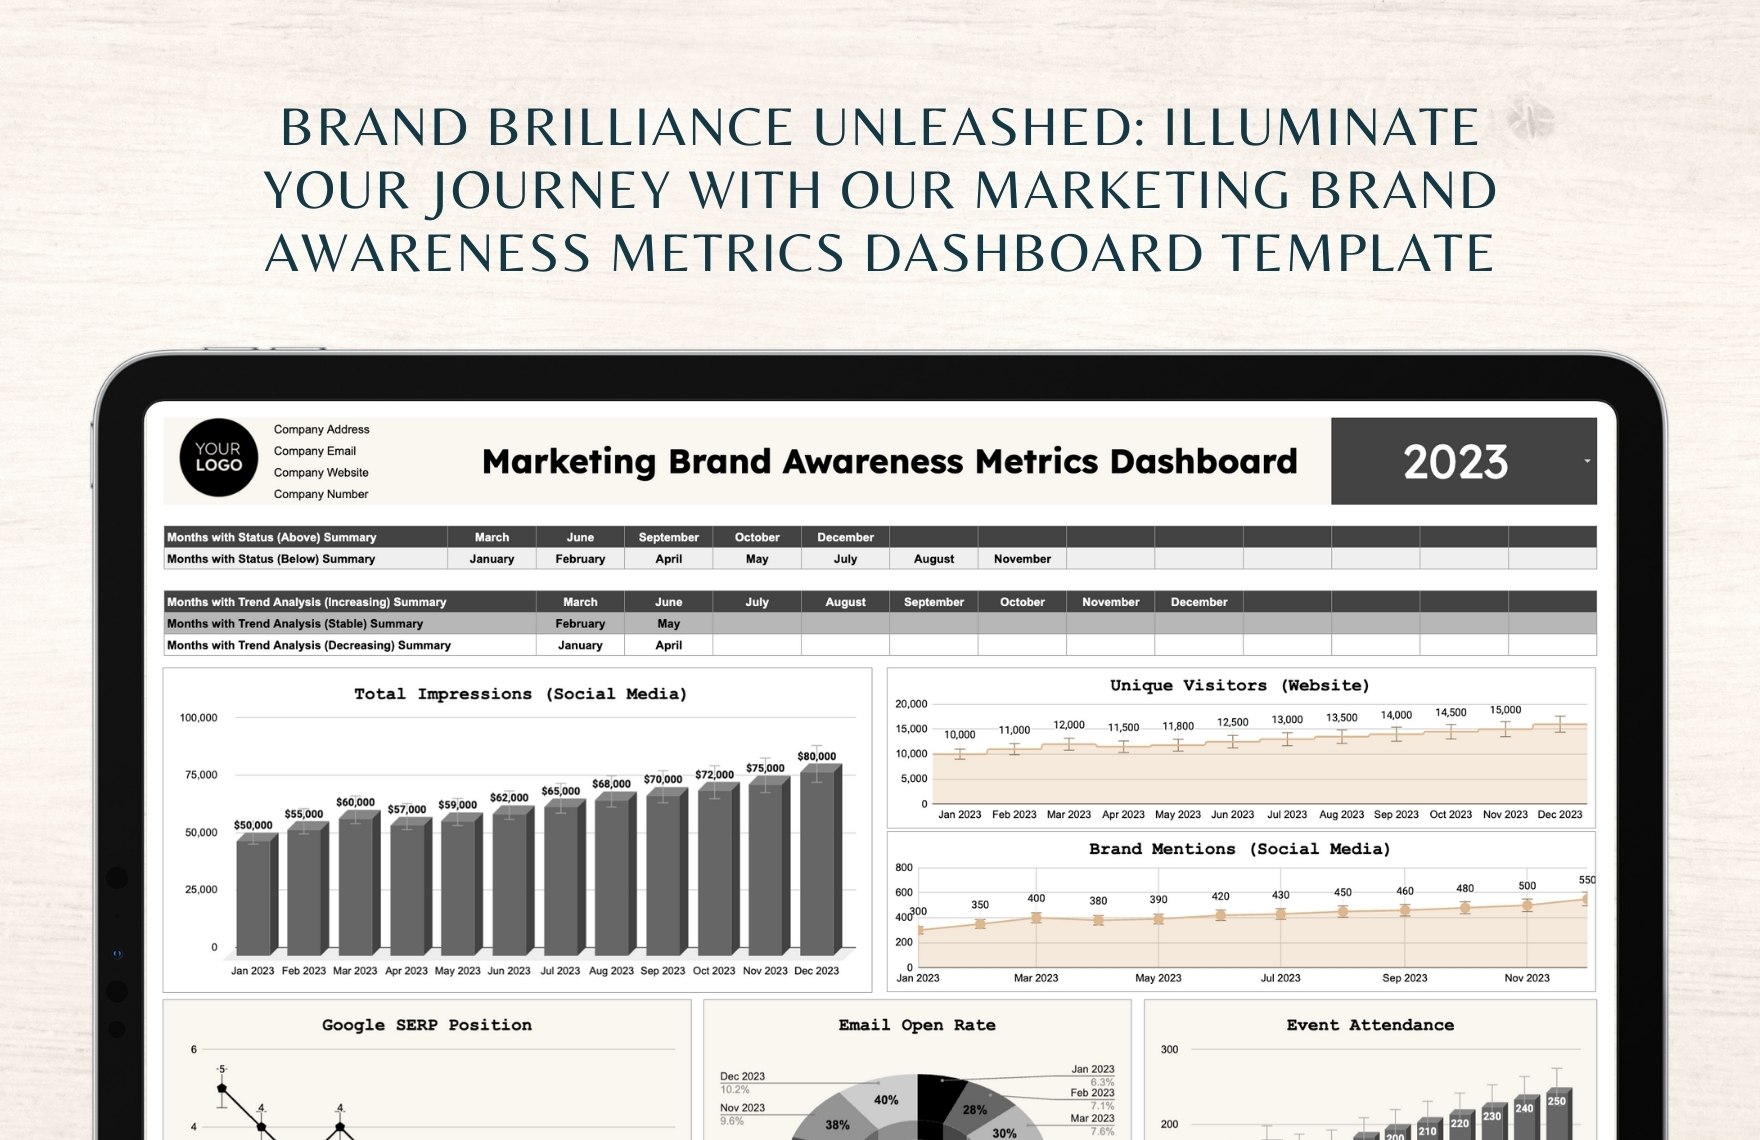 Marketing Brand Awareness Metrics Dashboard Template